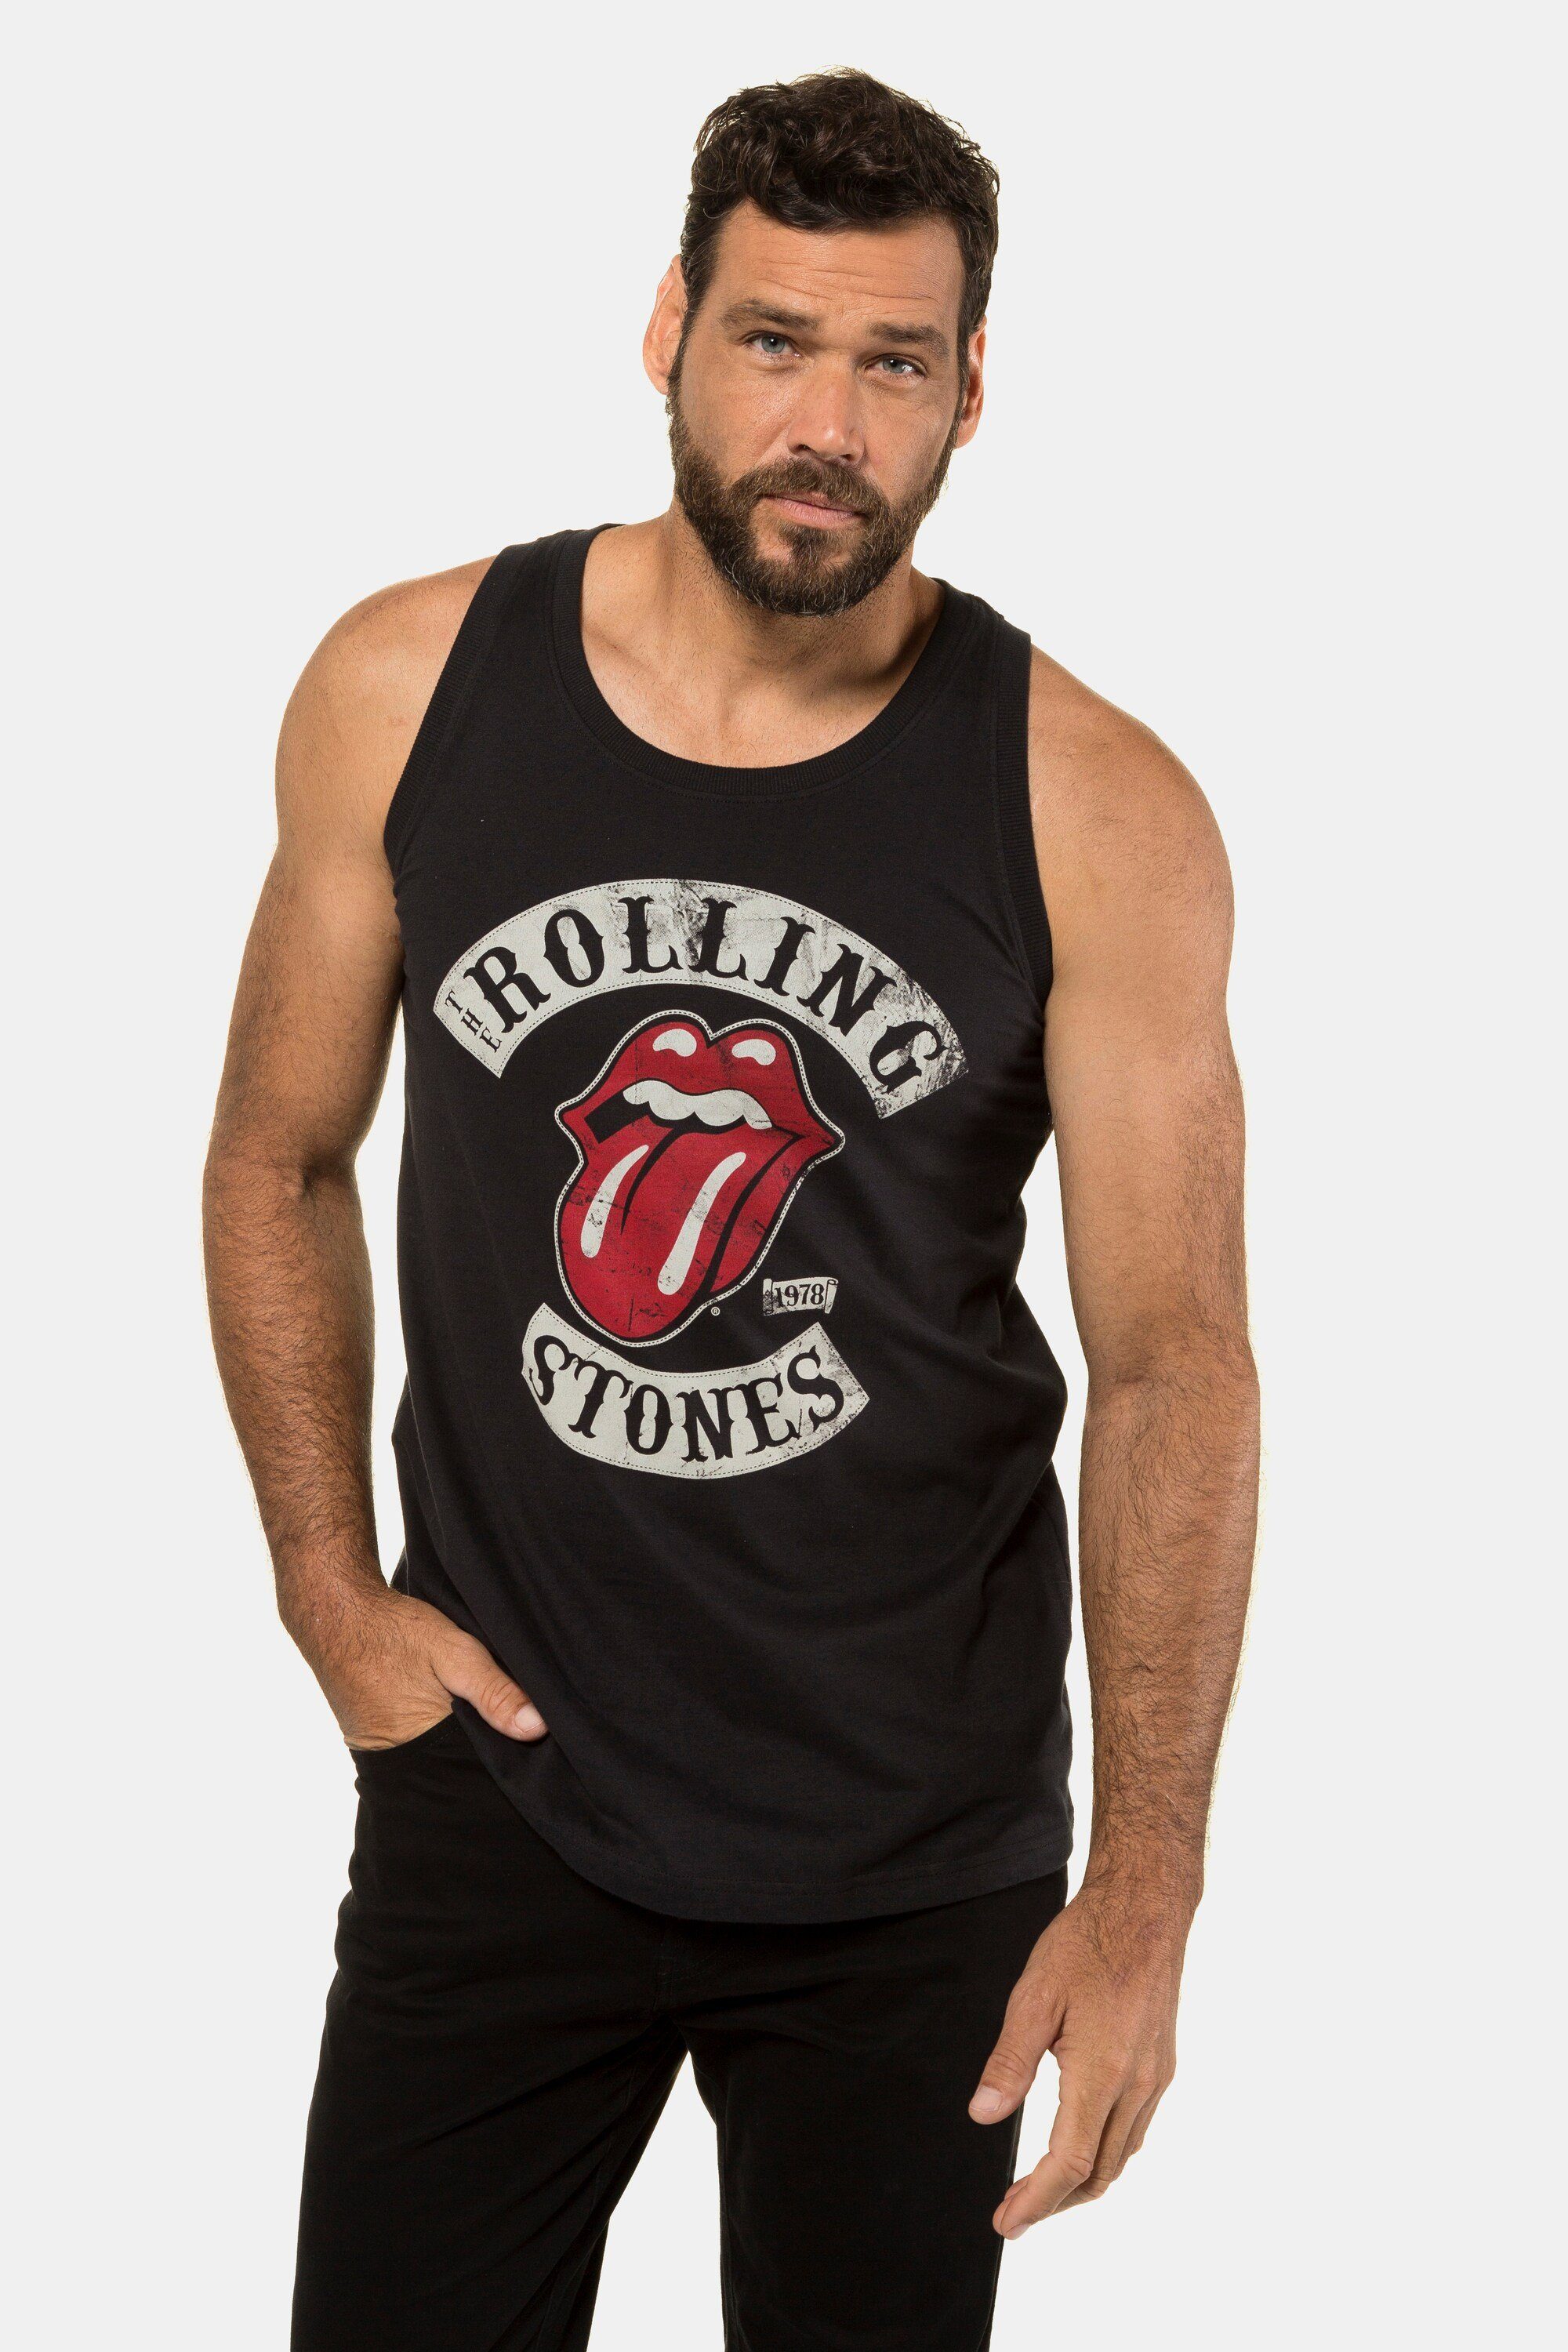 JP1880 T-Shirt Tanktop Bandshirt Rolling Stones